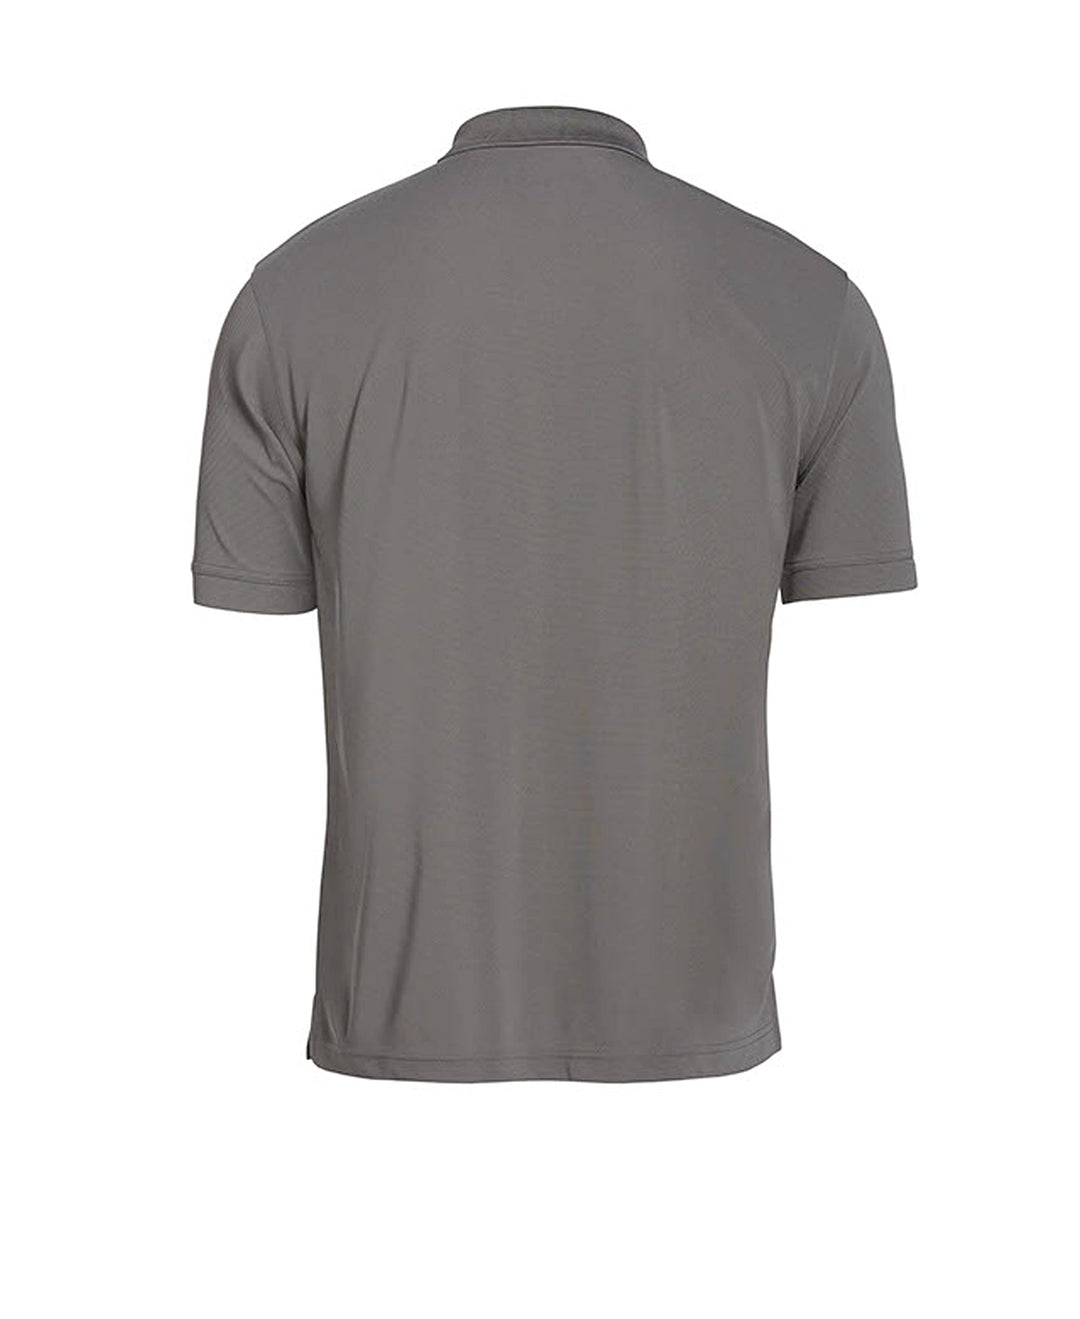 Jack Nicklaus Men's Micro Ottoman Golf Polo Shirt, Smoked Pearl, 4X Large